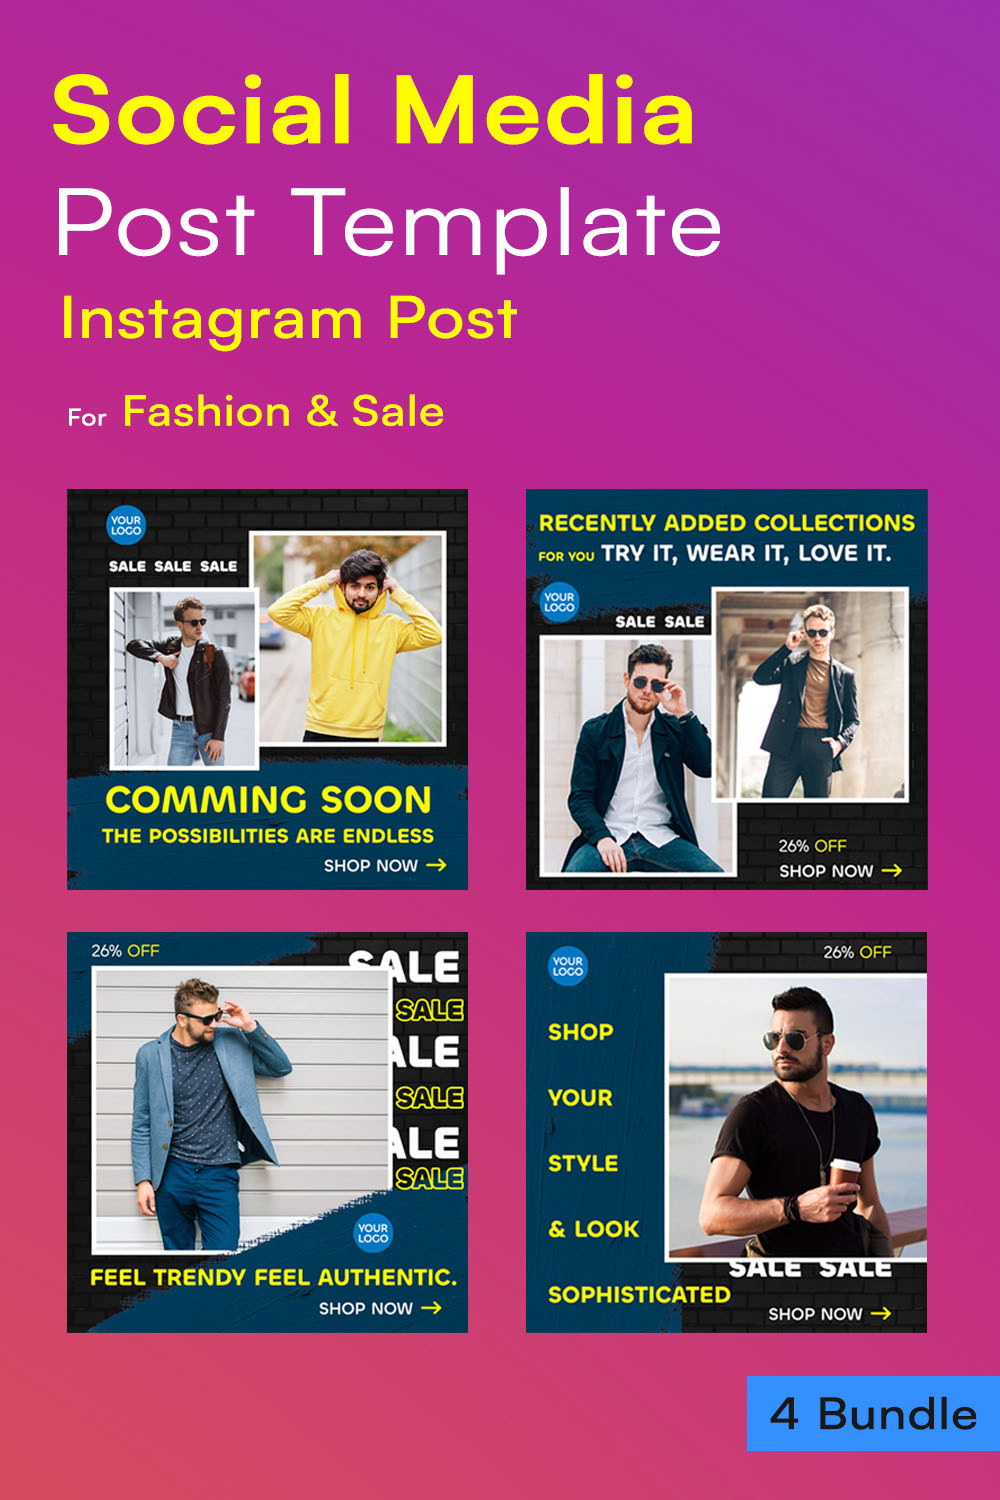 Sale And Fashion - Social Media Post Bundle Tamplates For Instagram Pinterest Image.